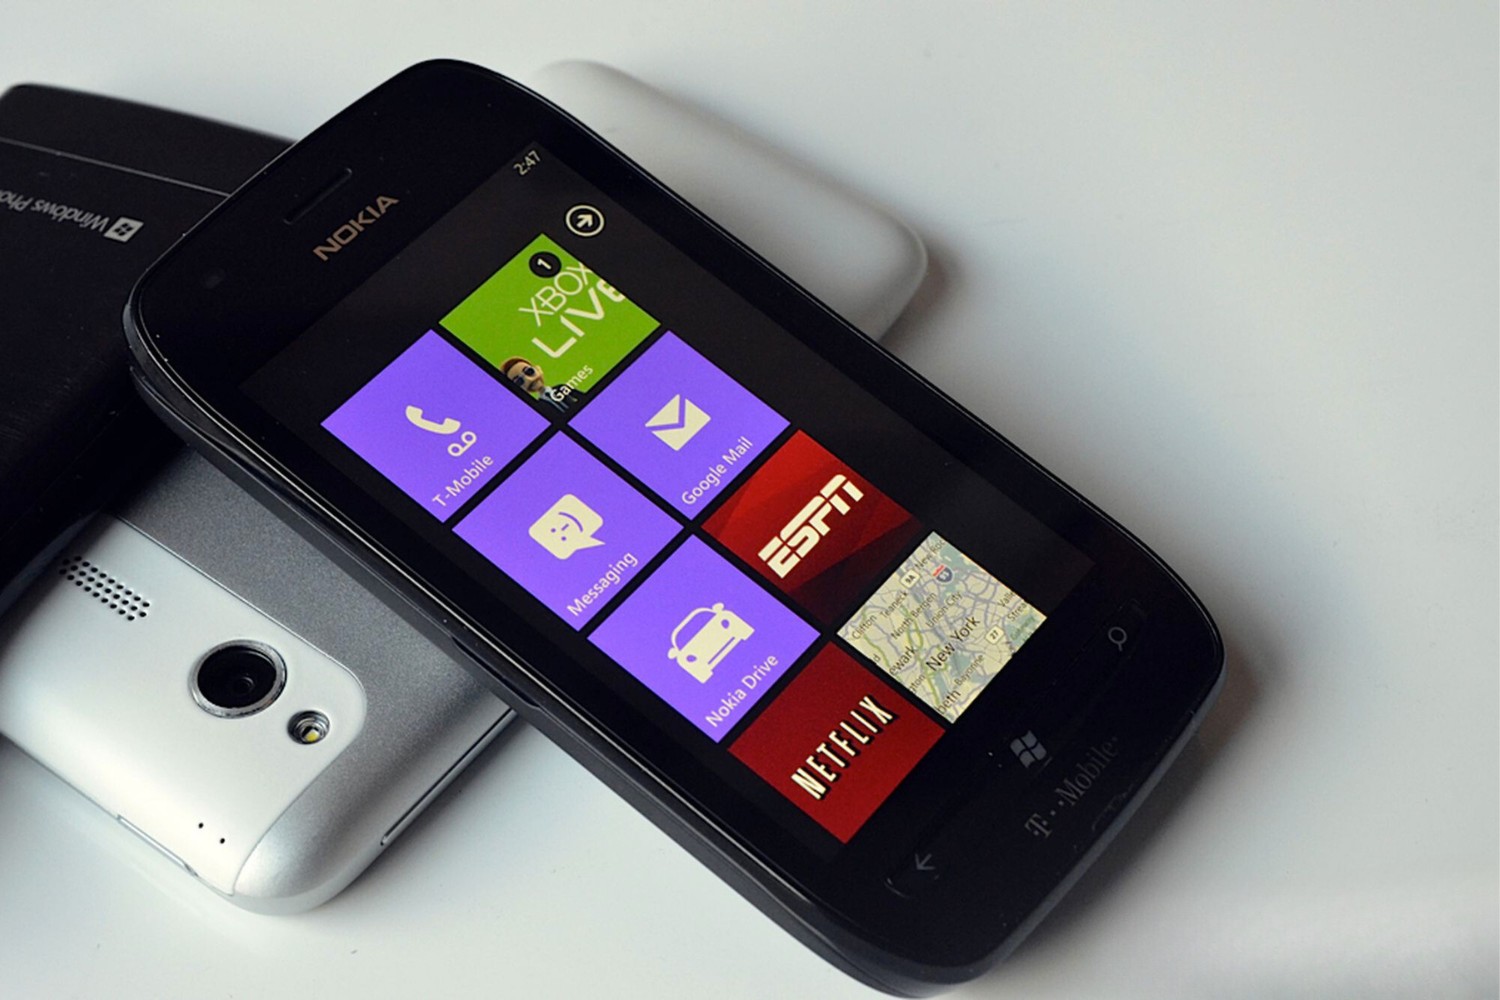 Turning Nokia Lumia 710 Into Wi-Fi Hotspot: Step-by-Step Instructions